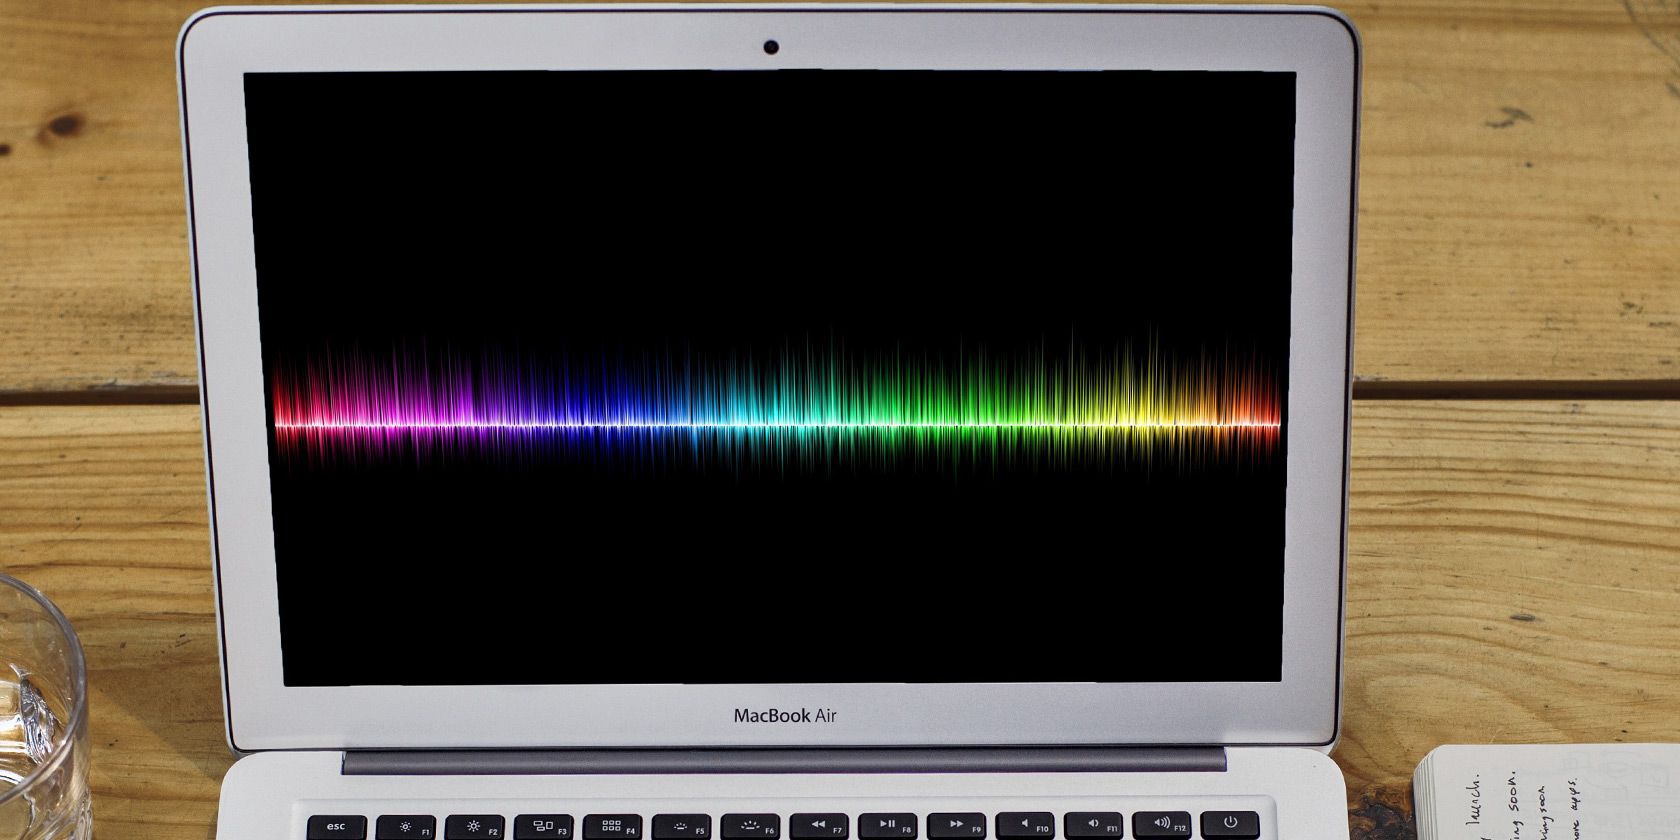 Audio signal on MacBook screen